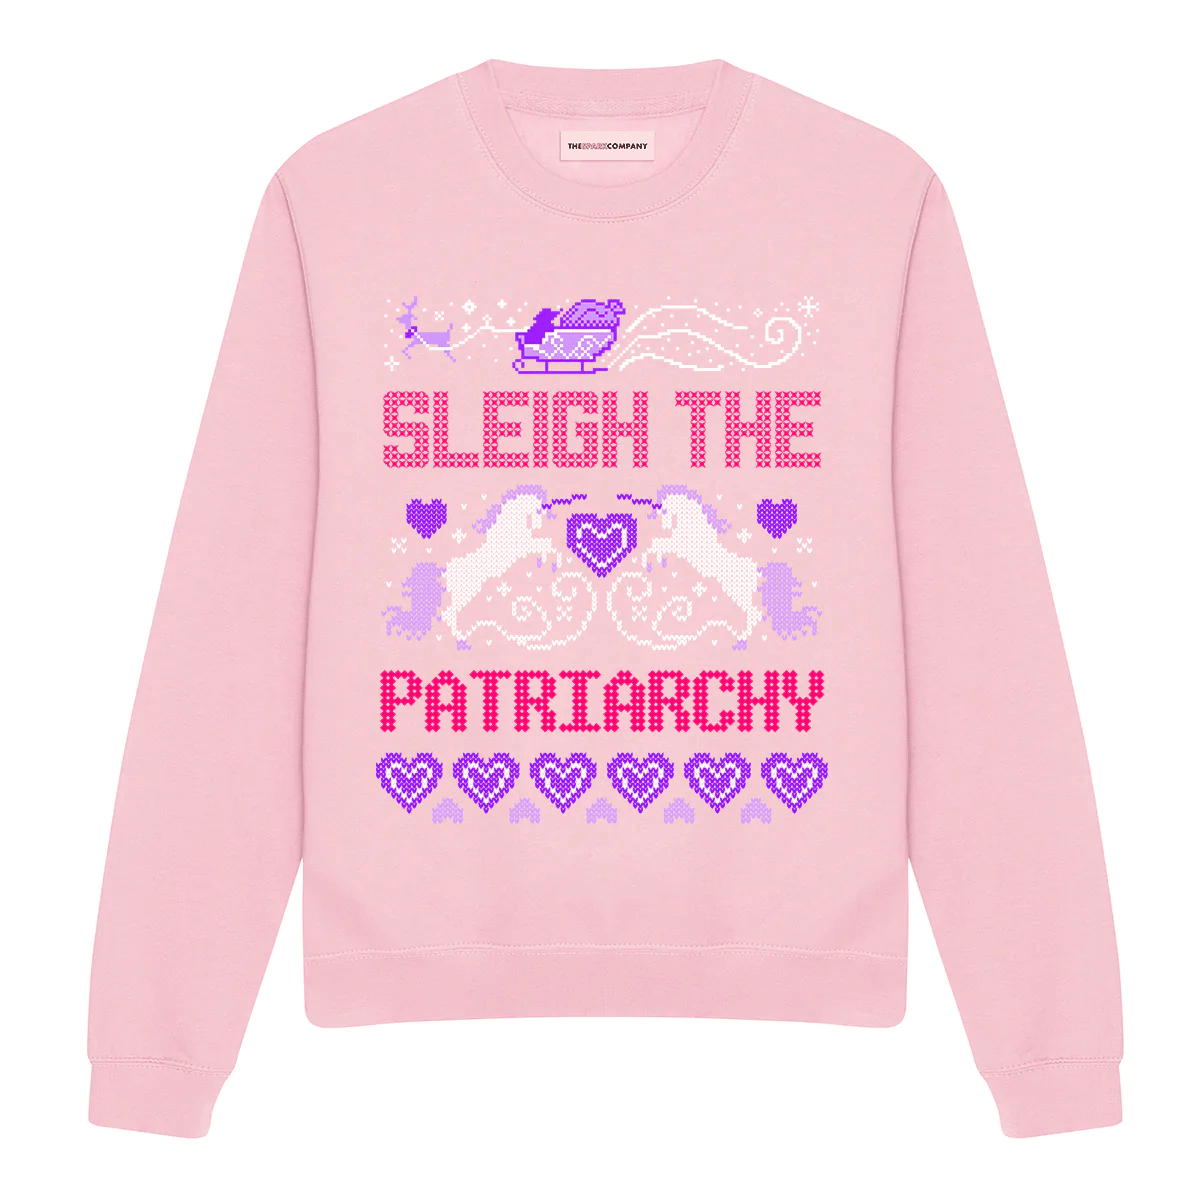 59. Sleigh the Patriarchy Ugly Christmas Sweatshirt